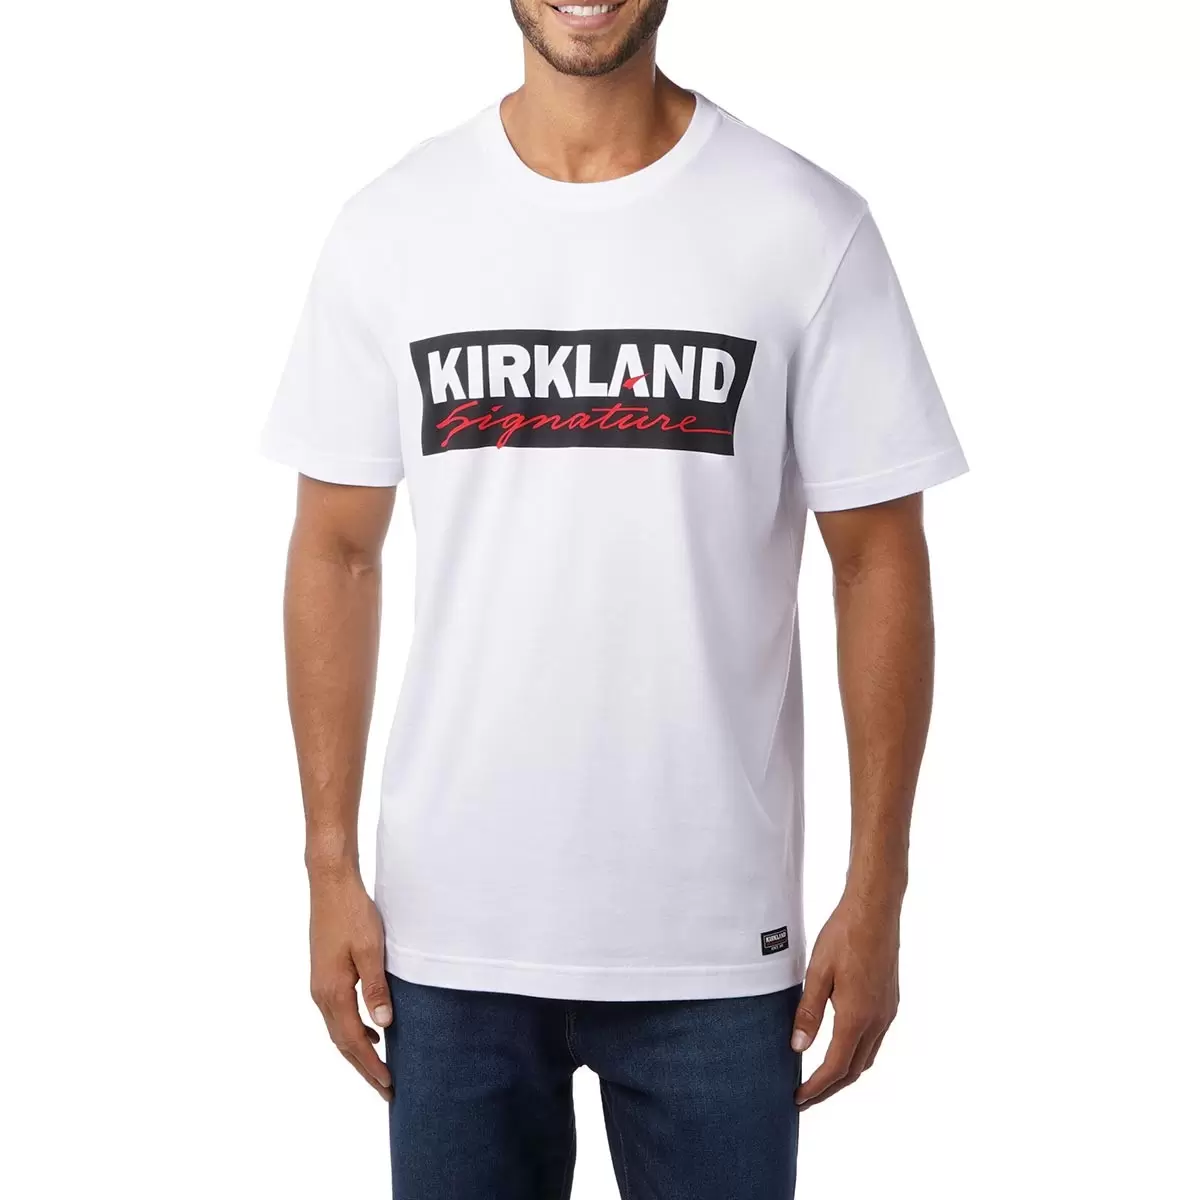 Kirkland Signature 科克蘭 Logo 短袖上衣 白 XXXL